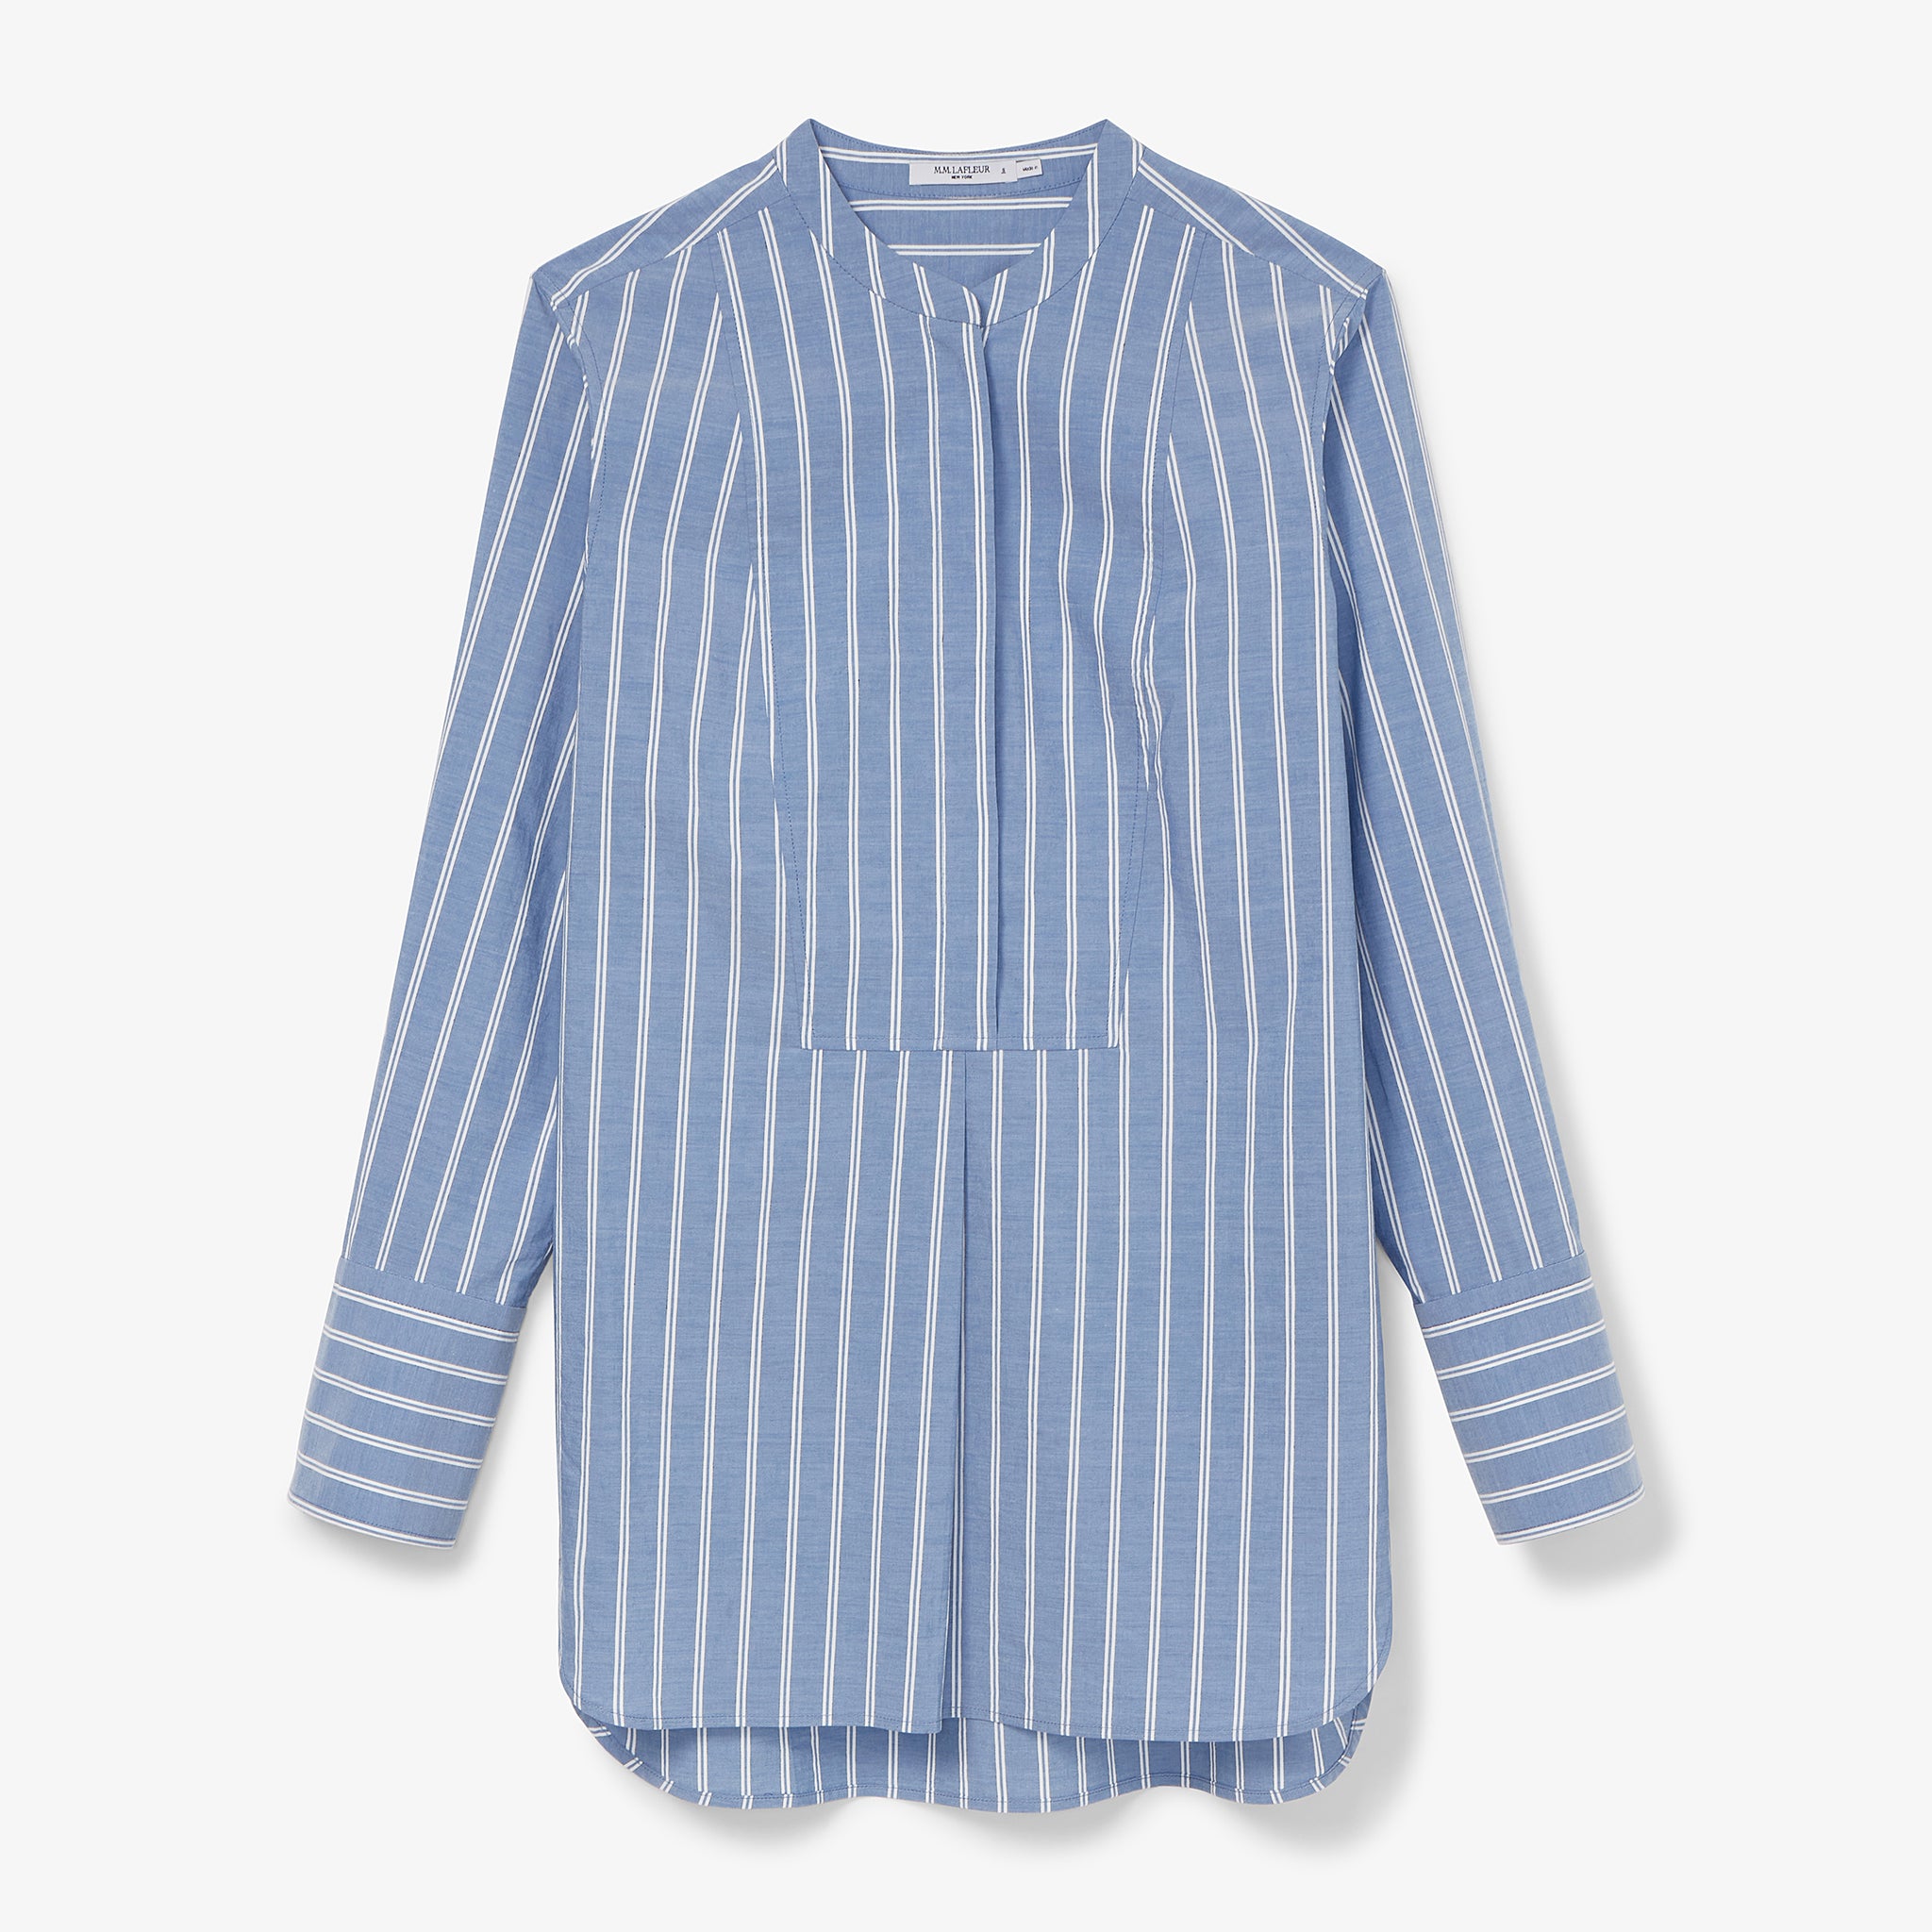 packshot image of the Nichols shirt in blue and white poplin stripe